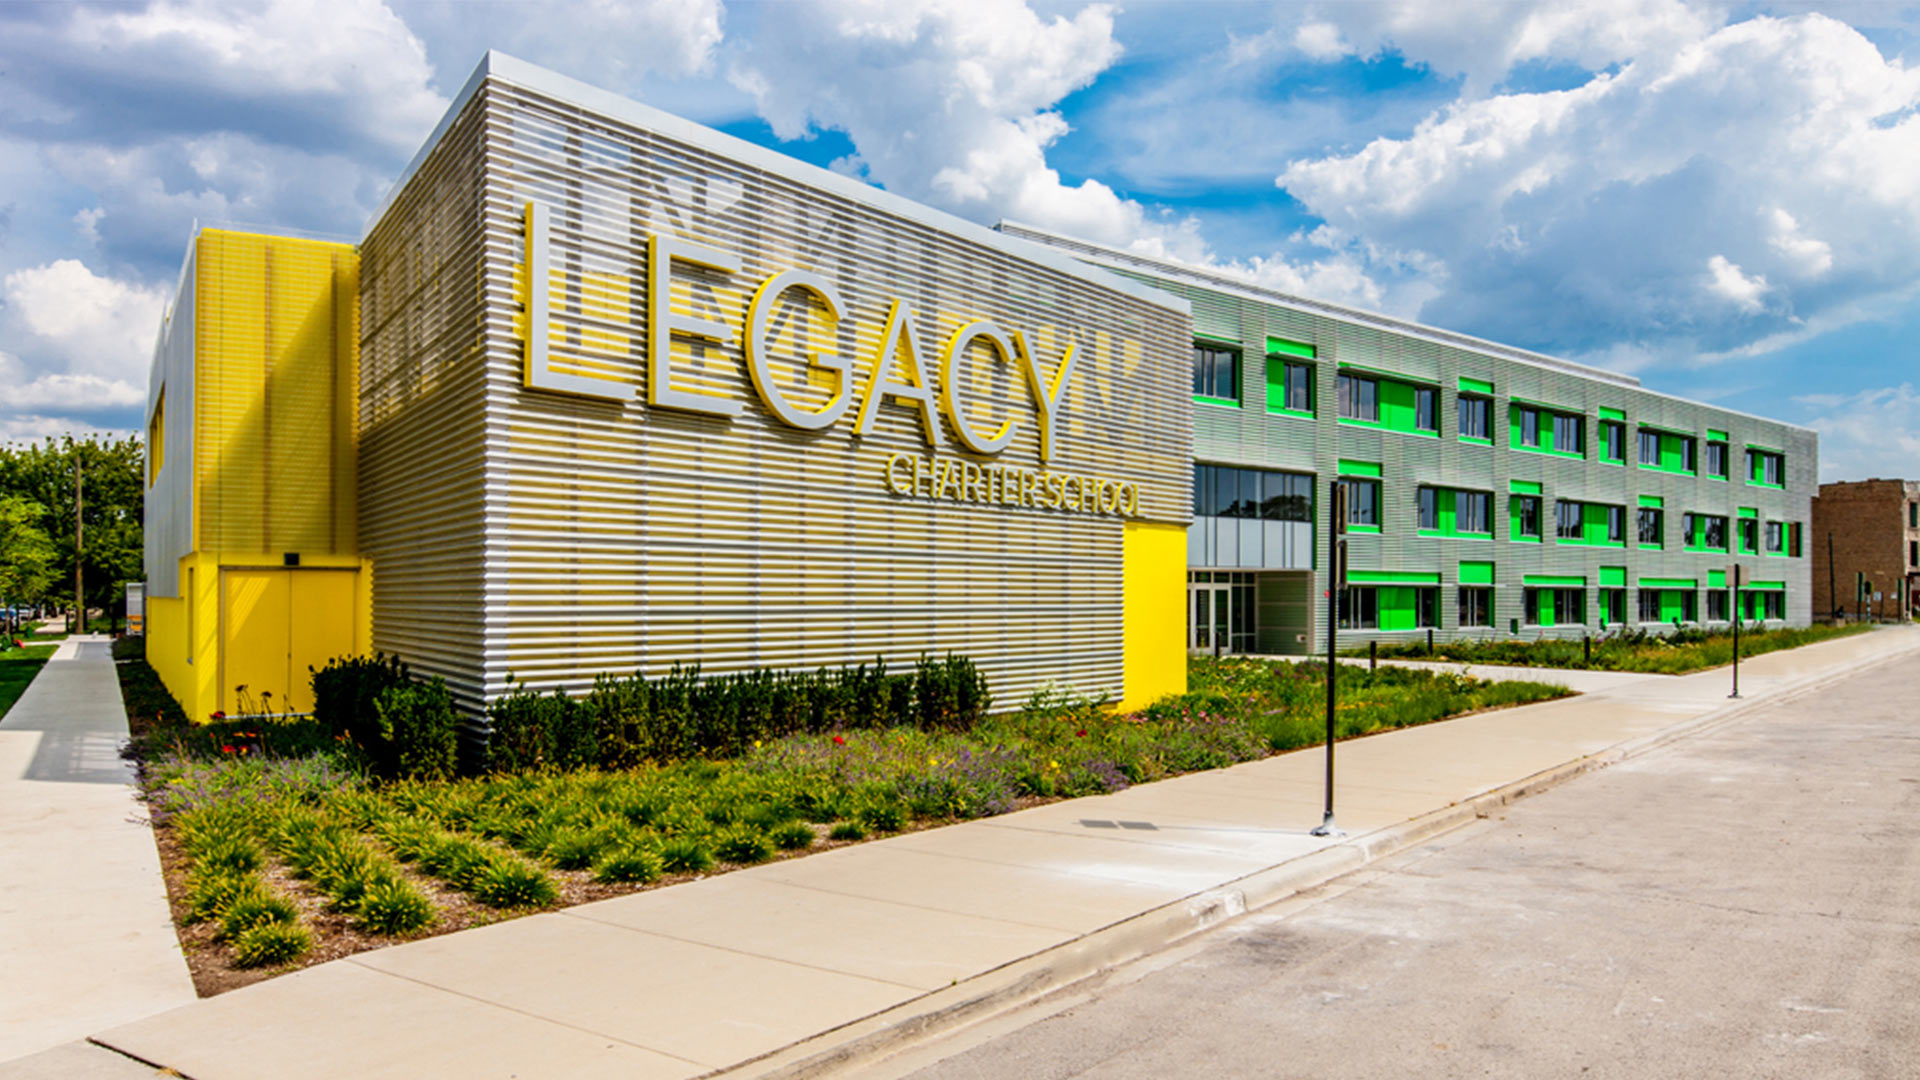 Legacy Charter School